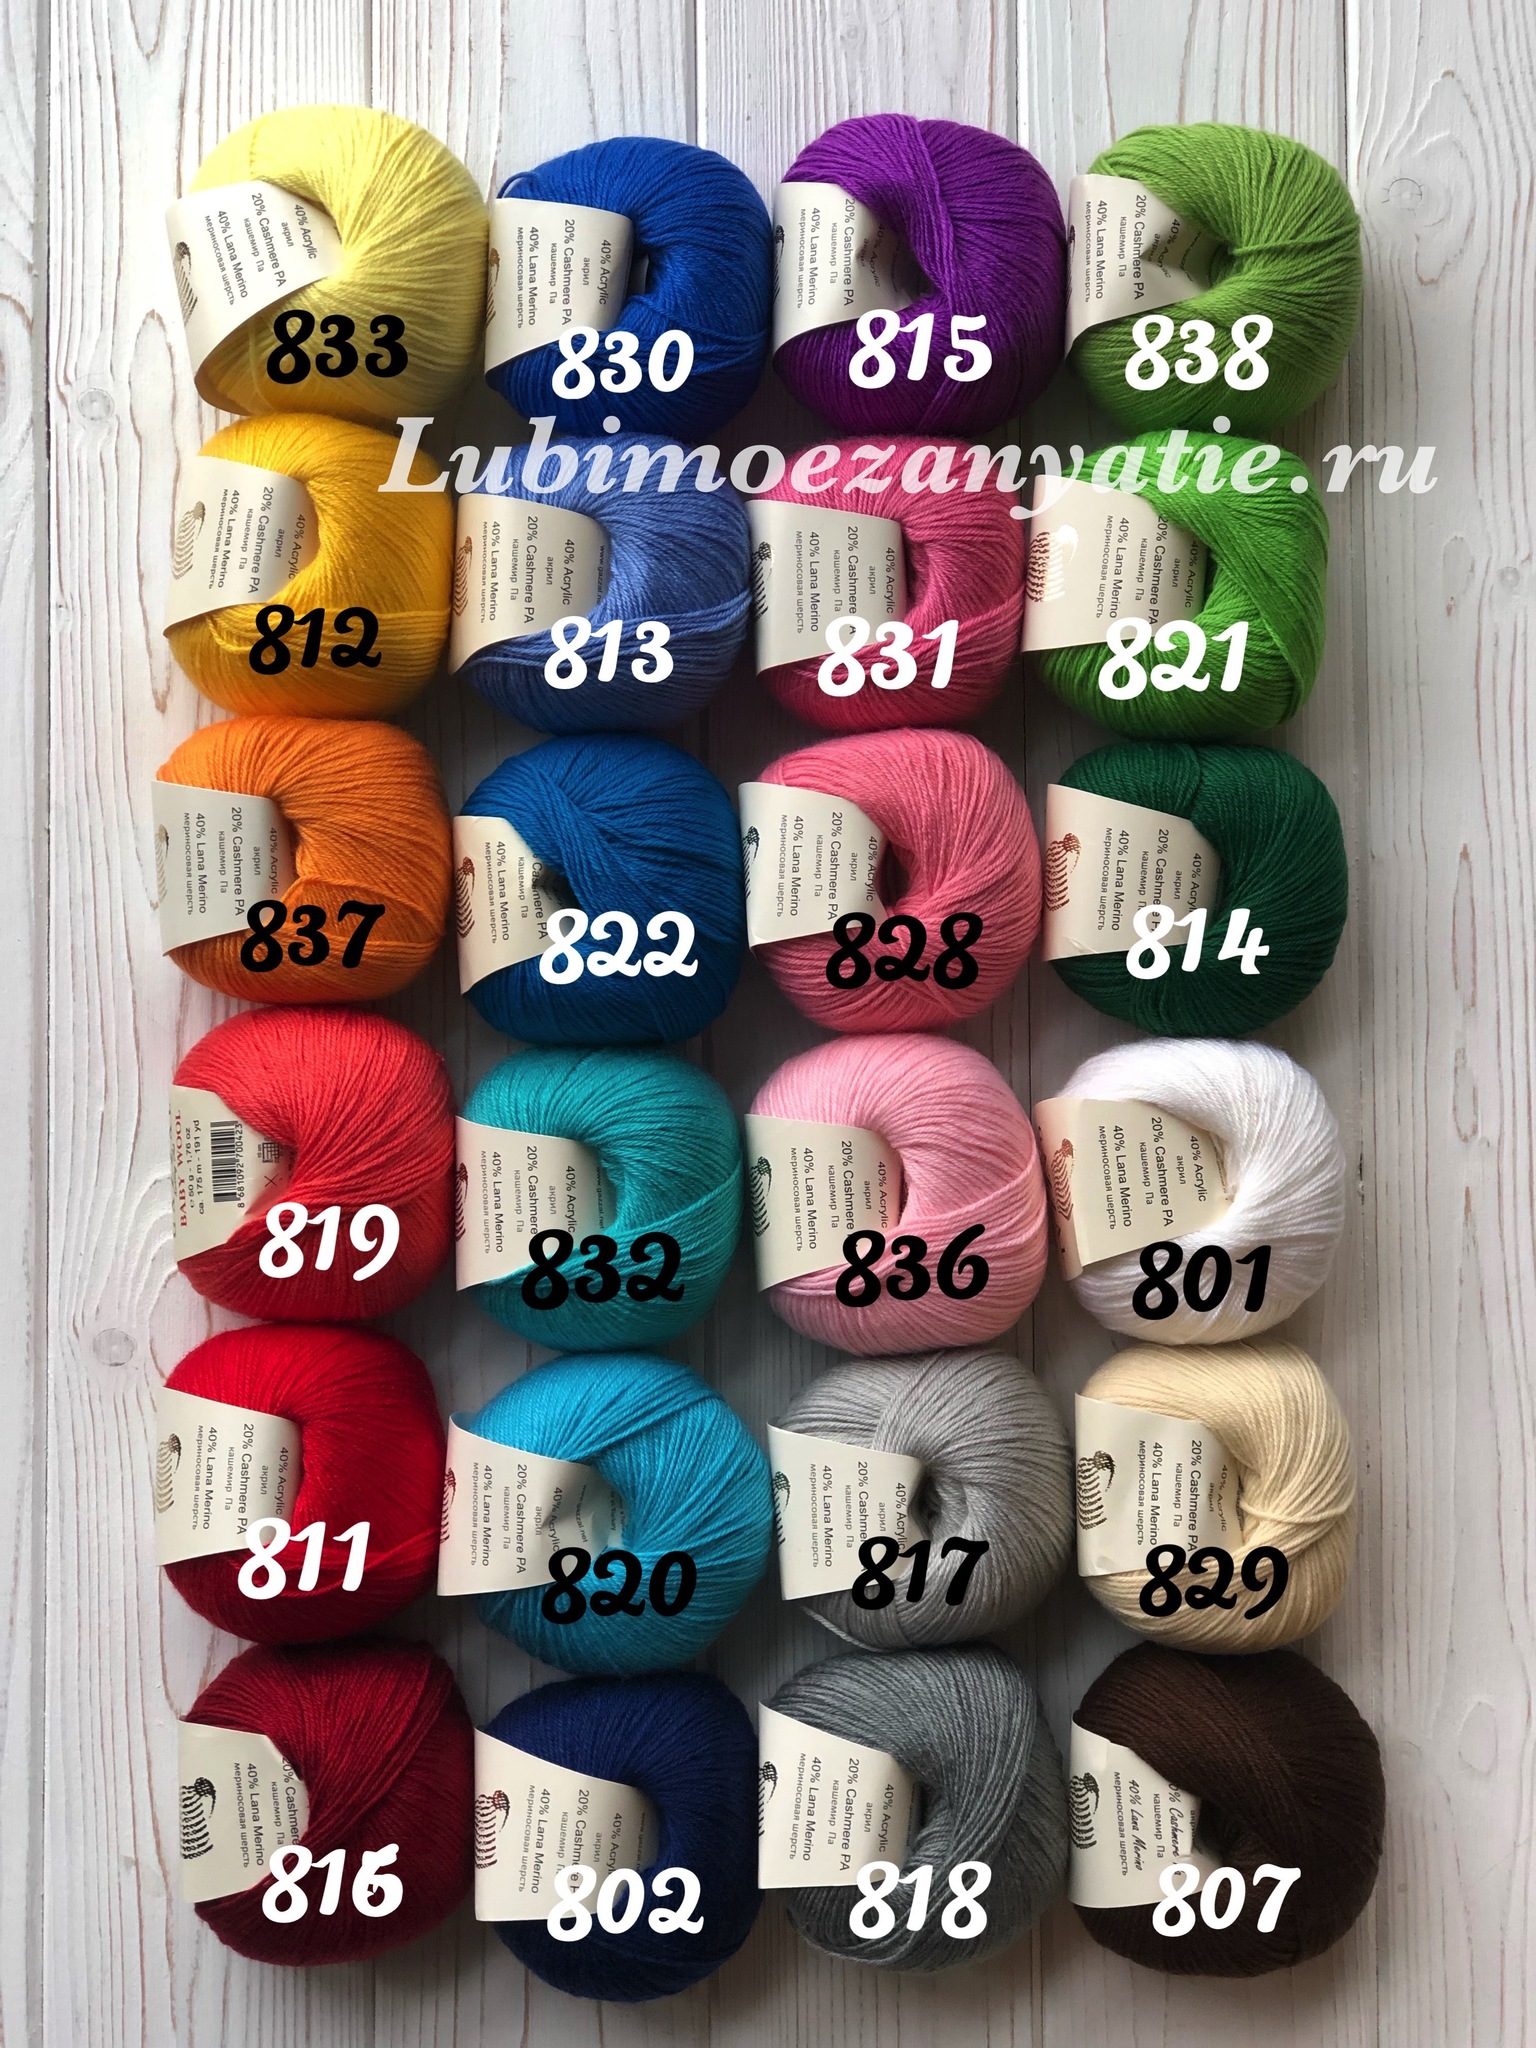 Gazzal Baby Wool Knitting Yarn, Pink - 831